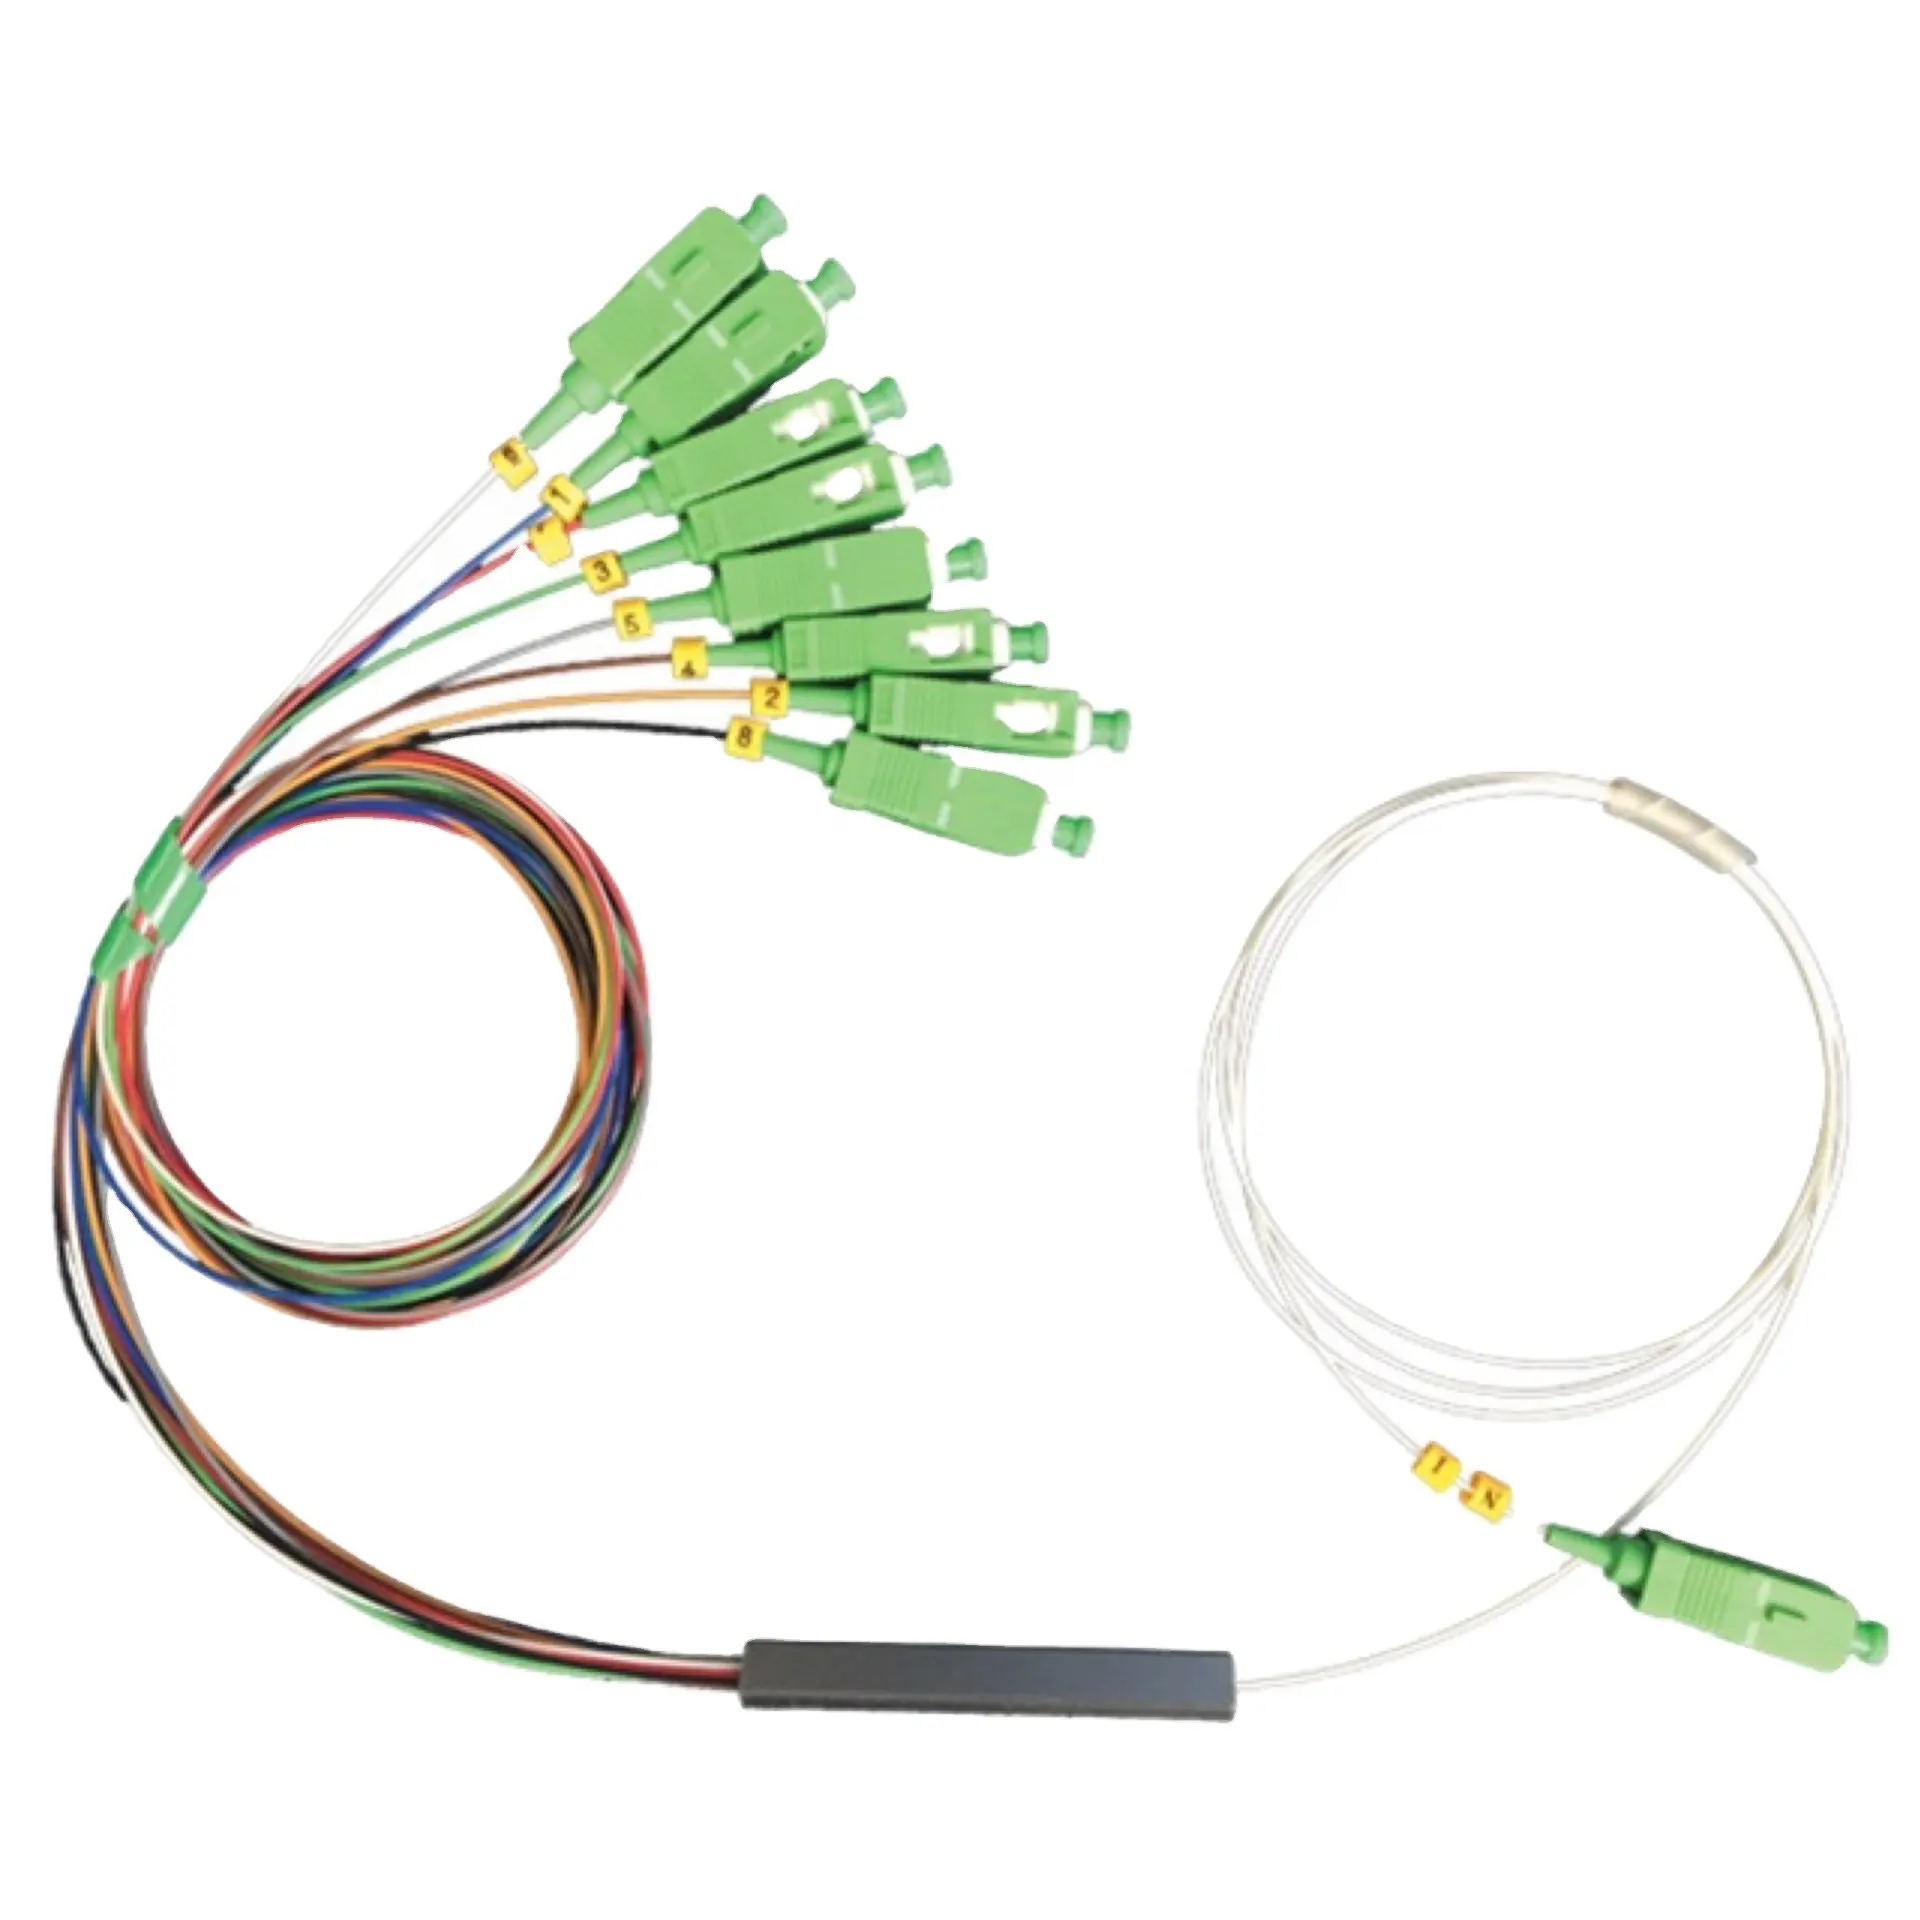 Kabel aktive splitter 1x3 1x4 1x6 1x16 1x64 stahl rohr pon fiber optical plc splitter ohne stecker